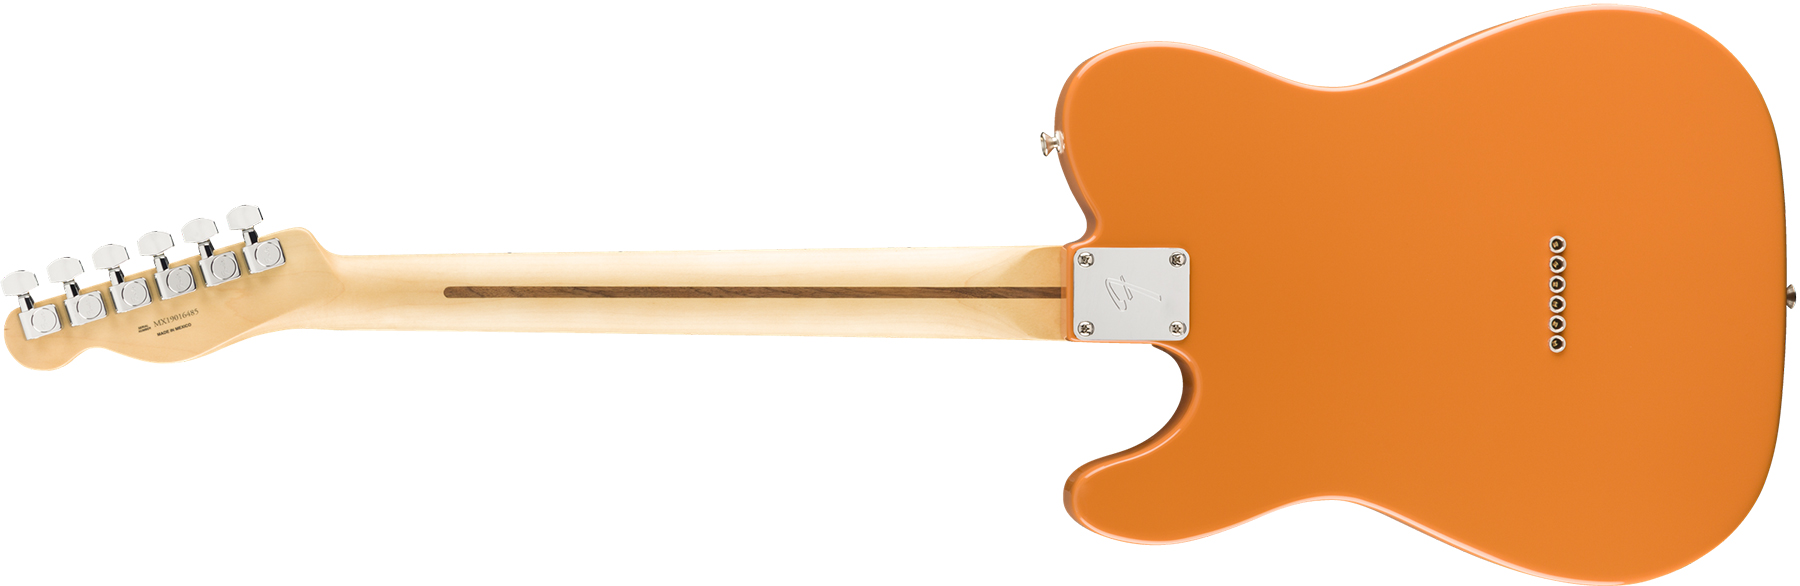 Fender Tele Player Mex Mn - Capri Orange - Guitarra eléctrica con forma de tel - Variation 1